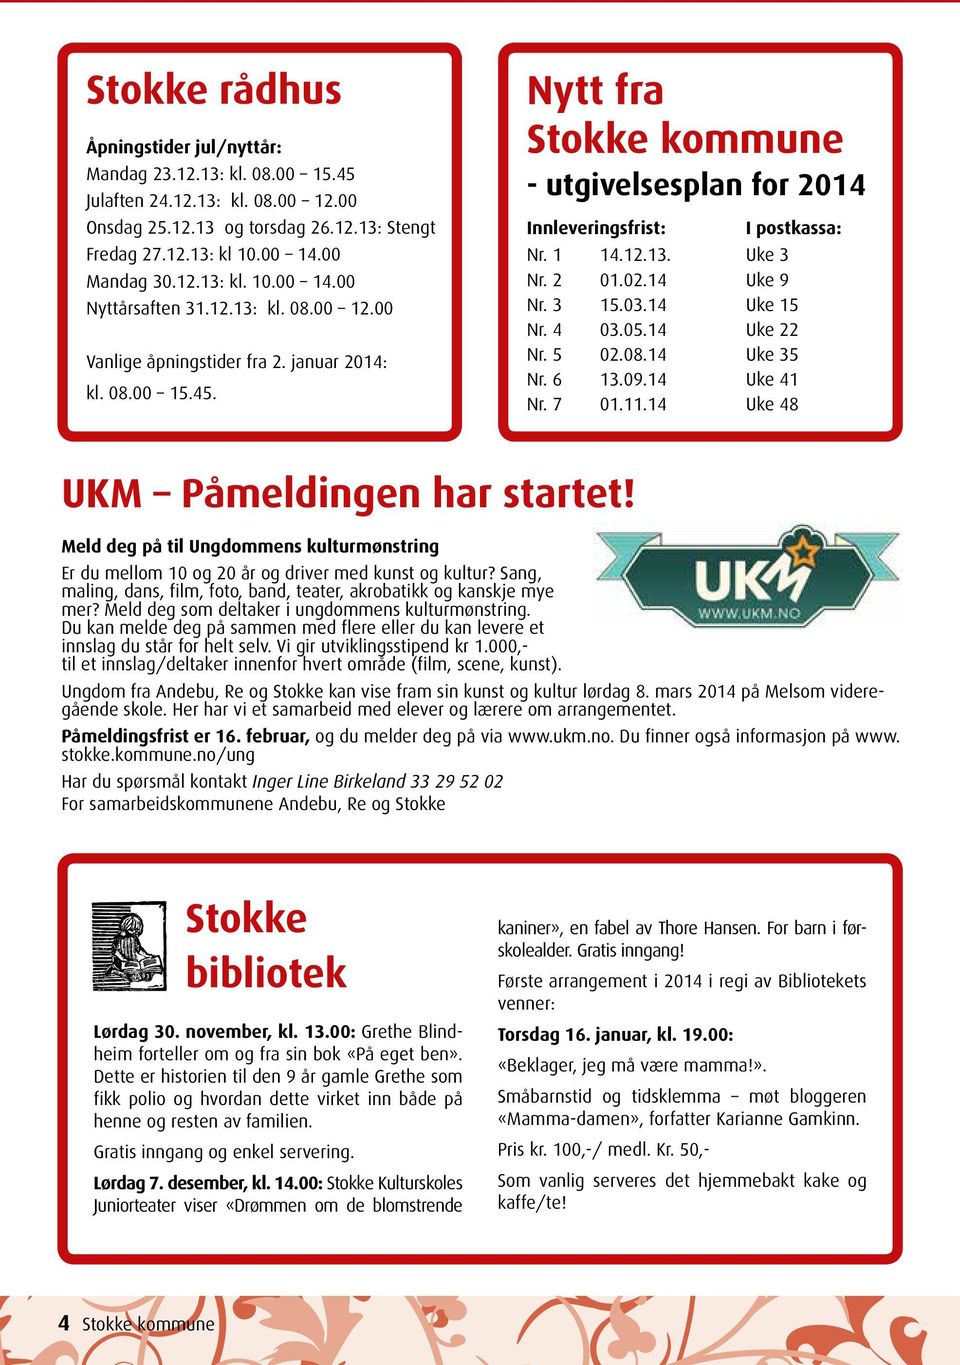 14 Uke 9 Nr. 3 15.03.14 Uke 15 Nr. 4 03.05.14 Uke 22 Nr. 5 02.08.14 Uke 35 Nr. 6 13.09.14 Uke 41 Nr. 7 01.11.14 Uke 48 UKM Påmeldingen har startet!